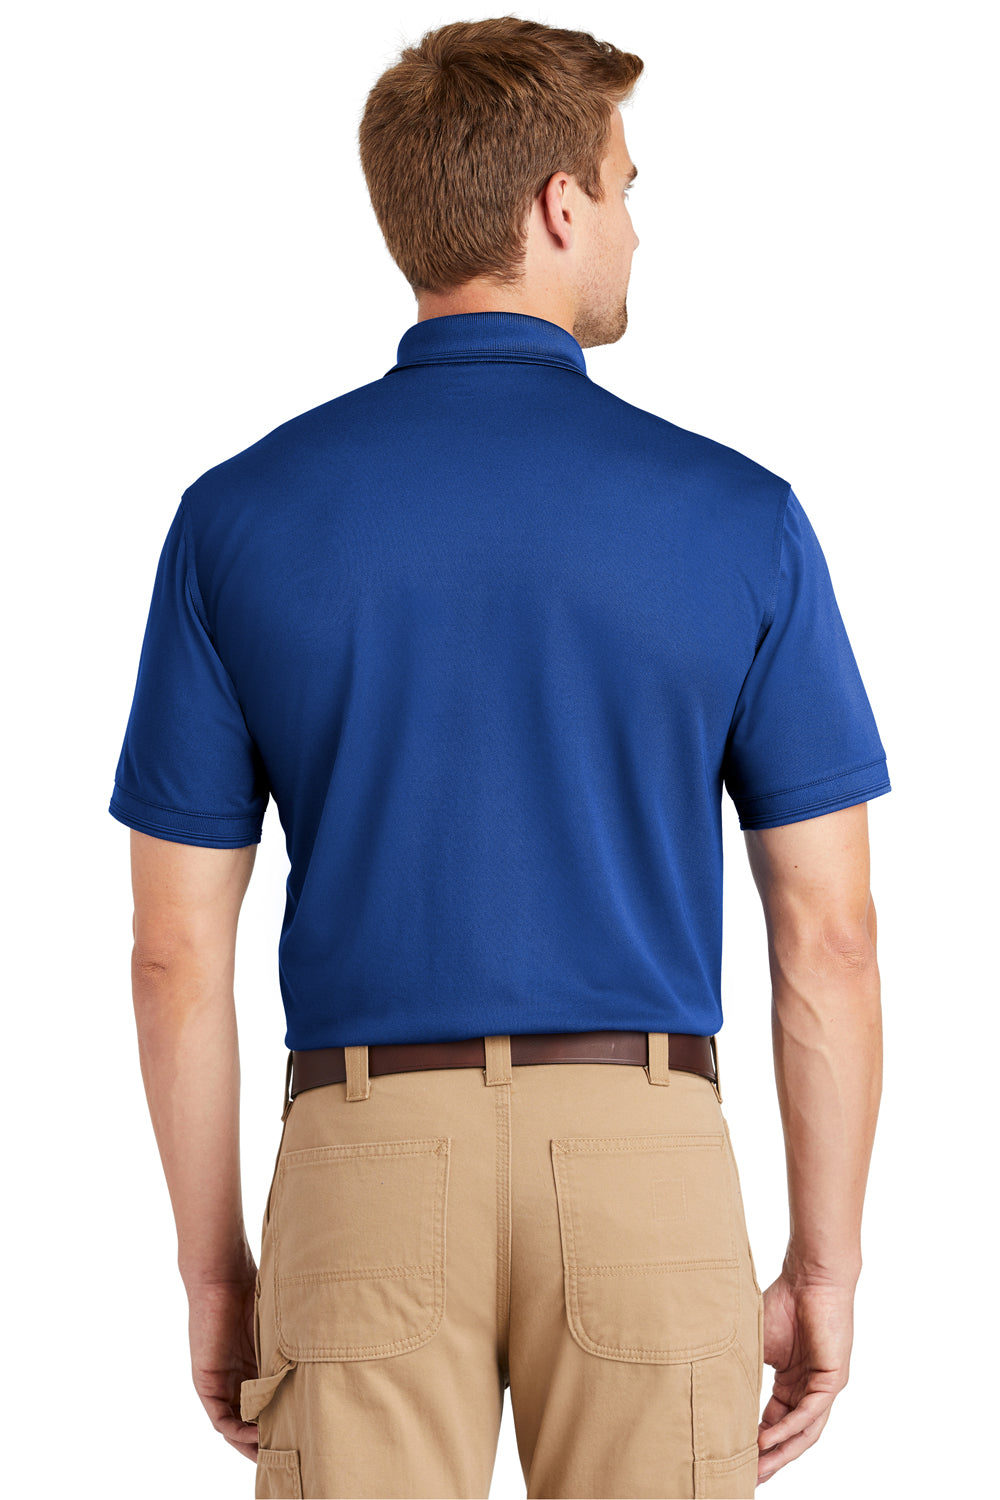 CornerStone CS4020 Mens Industrial Moisture Wicking Short Sleeve Polo Shirt Royal Blue Back